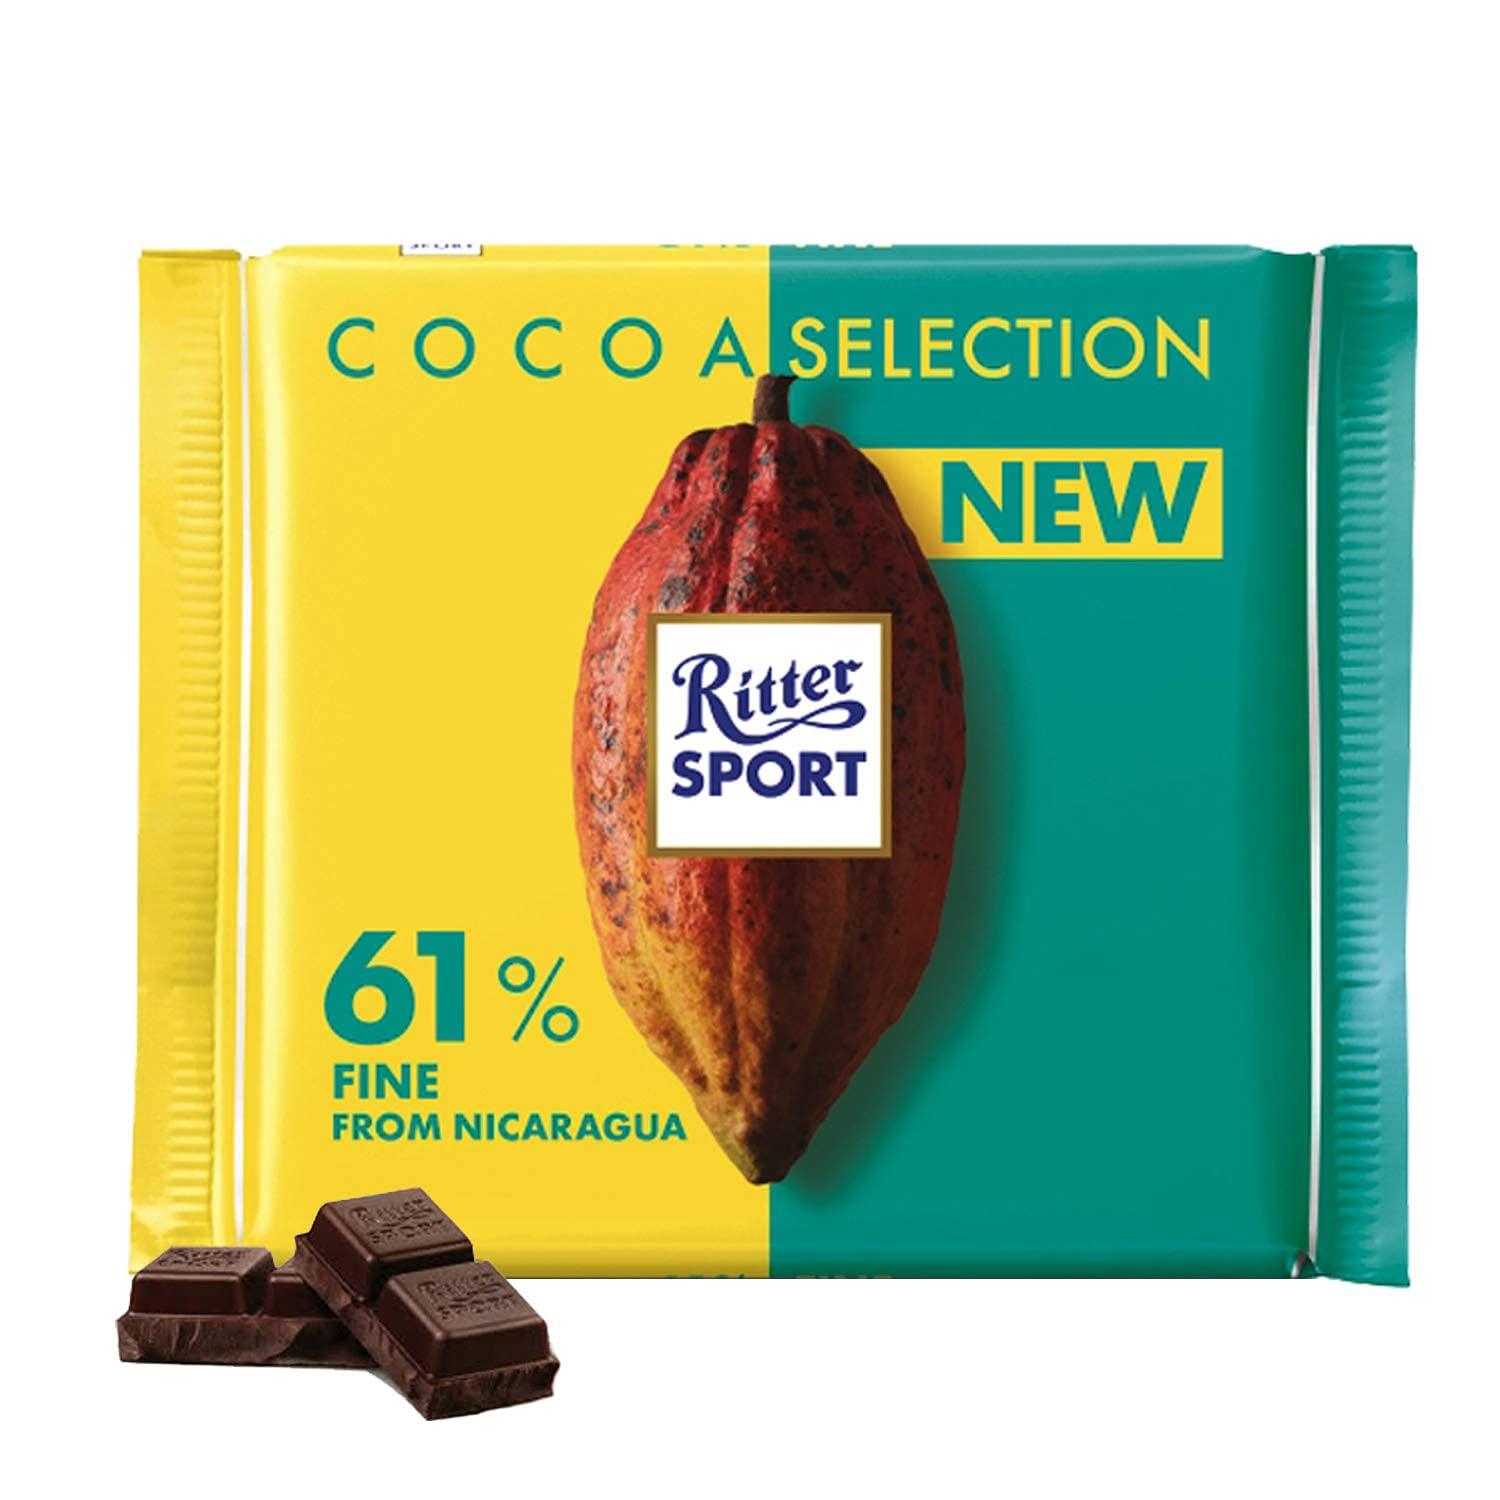 Ritter Sport - Cocoa Selection 61% Fine NICARAGUA Dark Chocolate - ORAS OFFICIAL